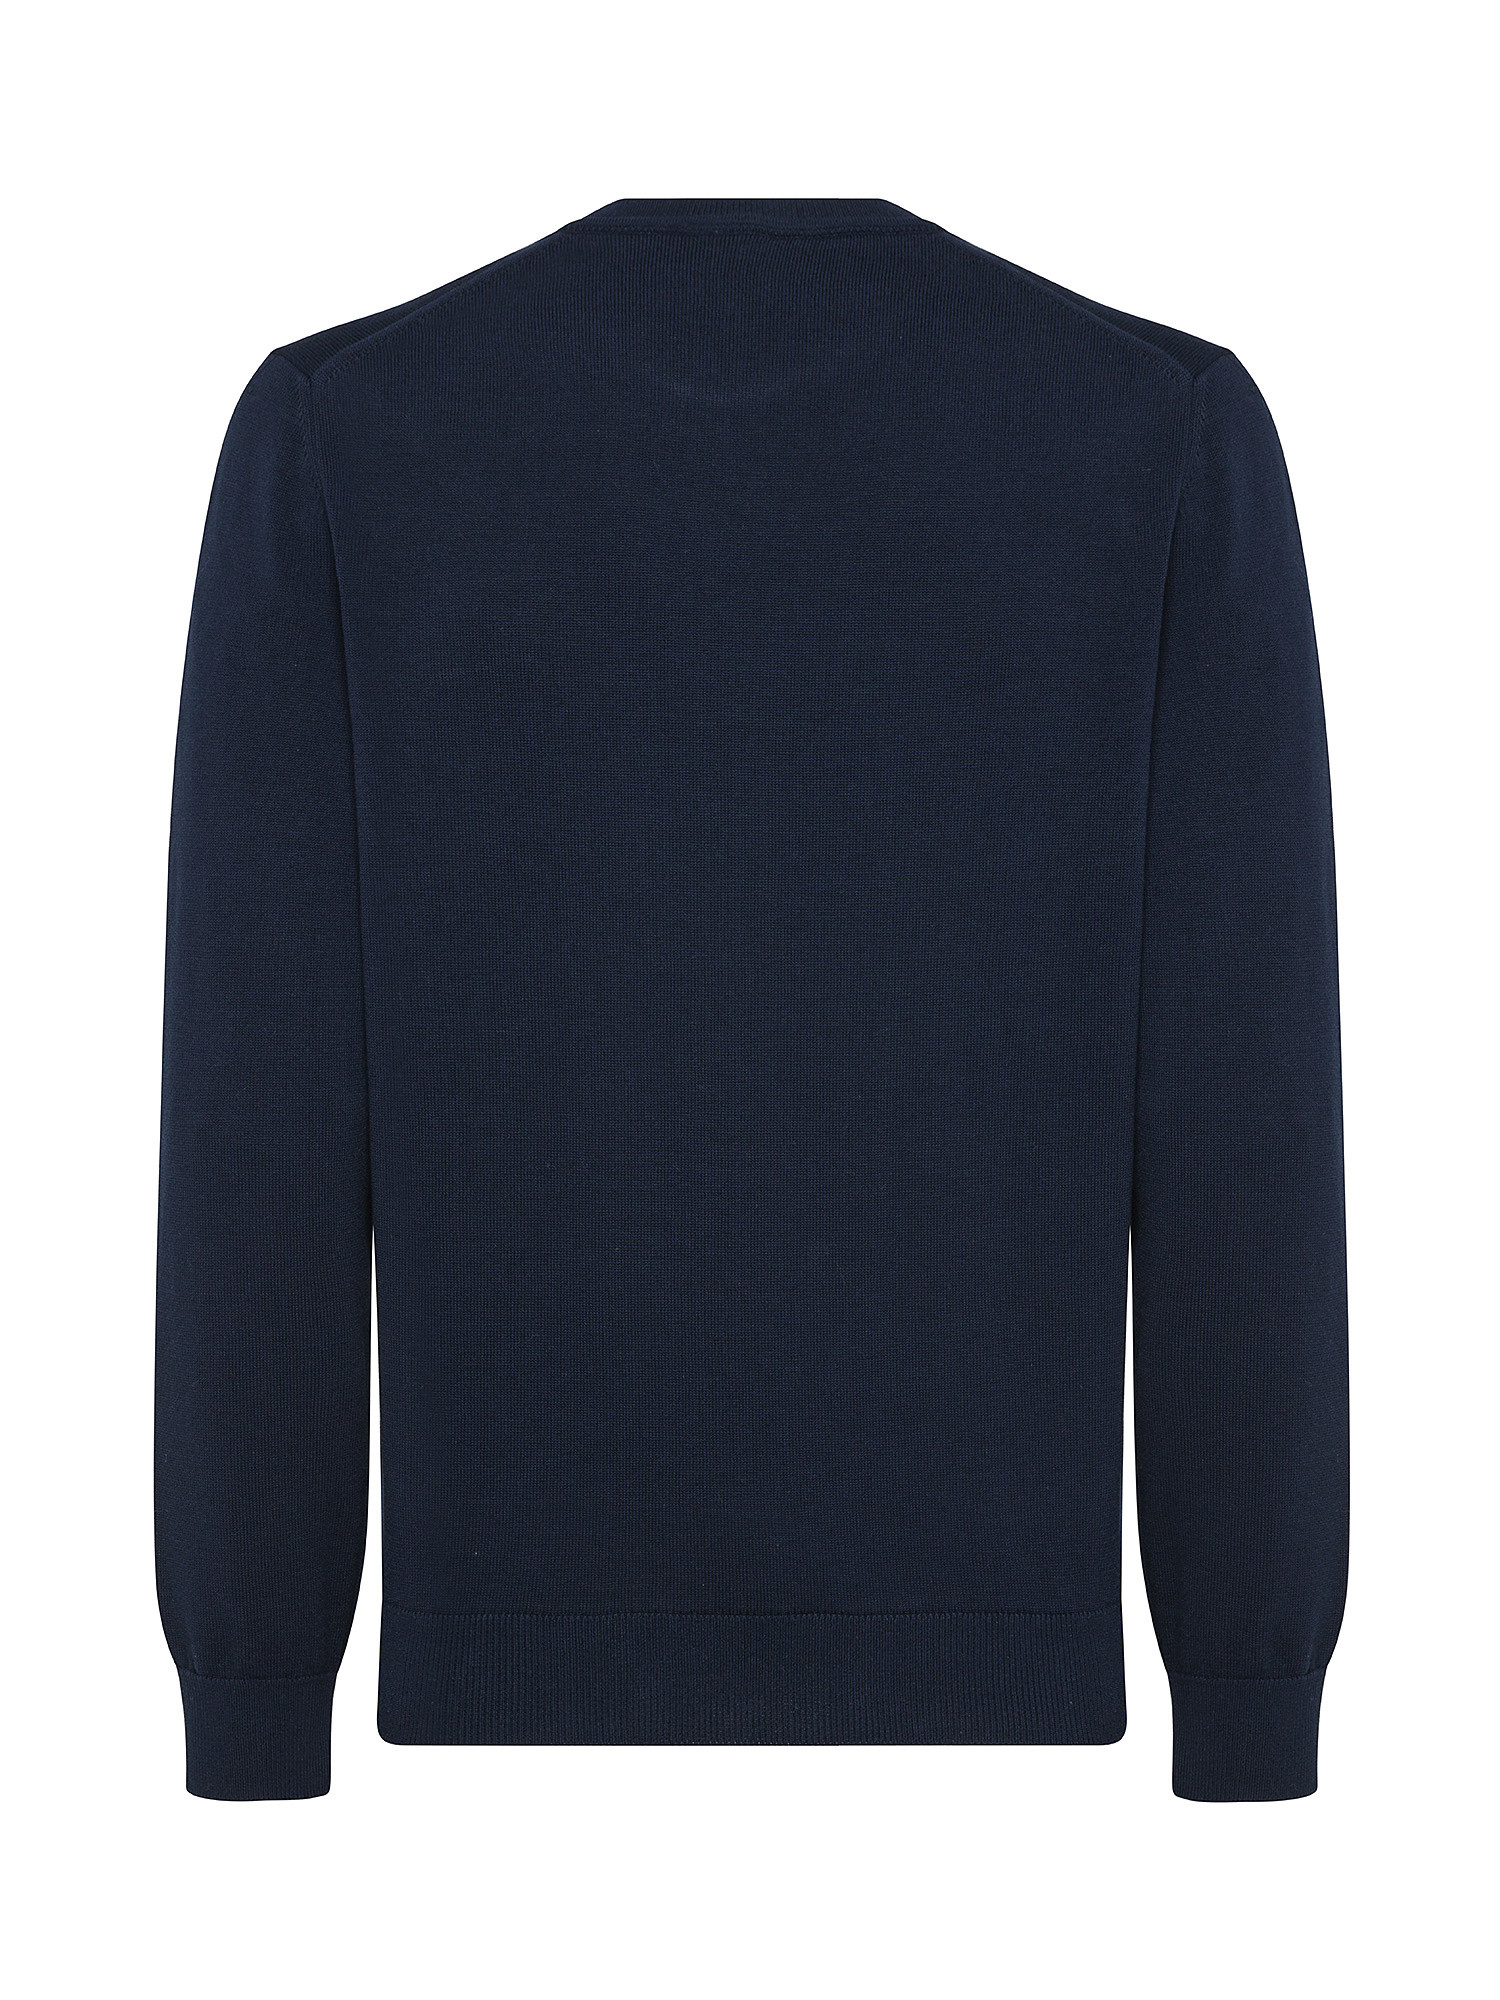 Lacoste - Cotton crewneck sweater, Dark Blue, large image number 1